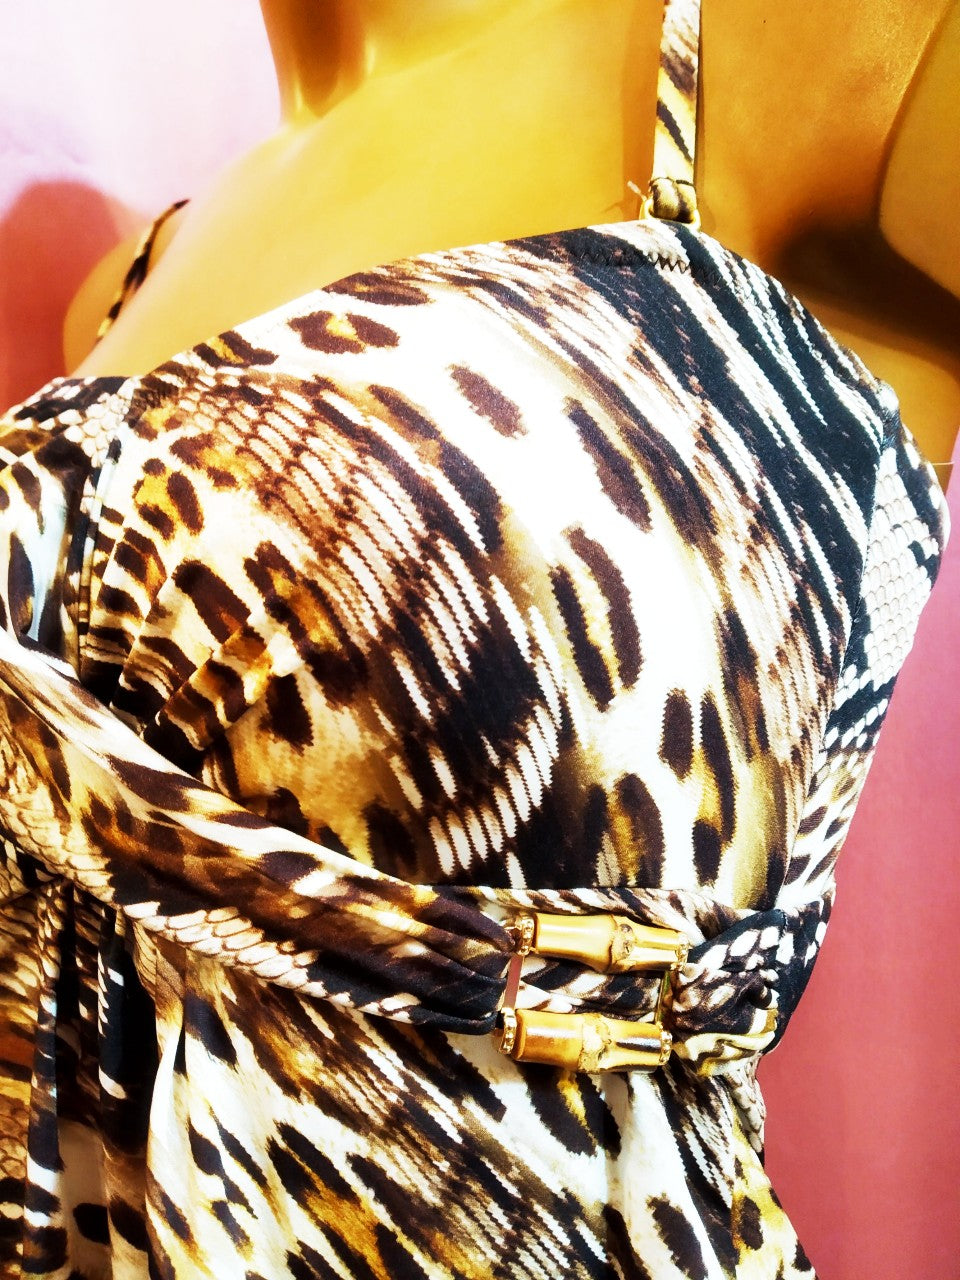 Women's Animal Print Bandeau One Piece Swimsuit, maillot de bain pour femme une pièce bandeau à imprimé animal, Bañador tipo bandeau de una pieza con estampado animal para mujer. bikinn.com